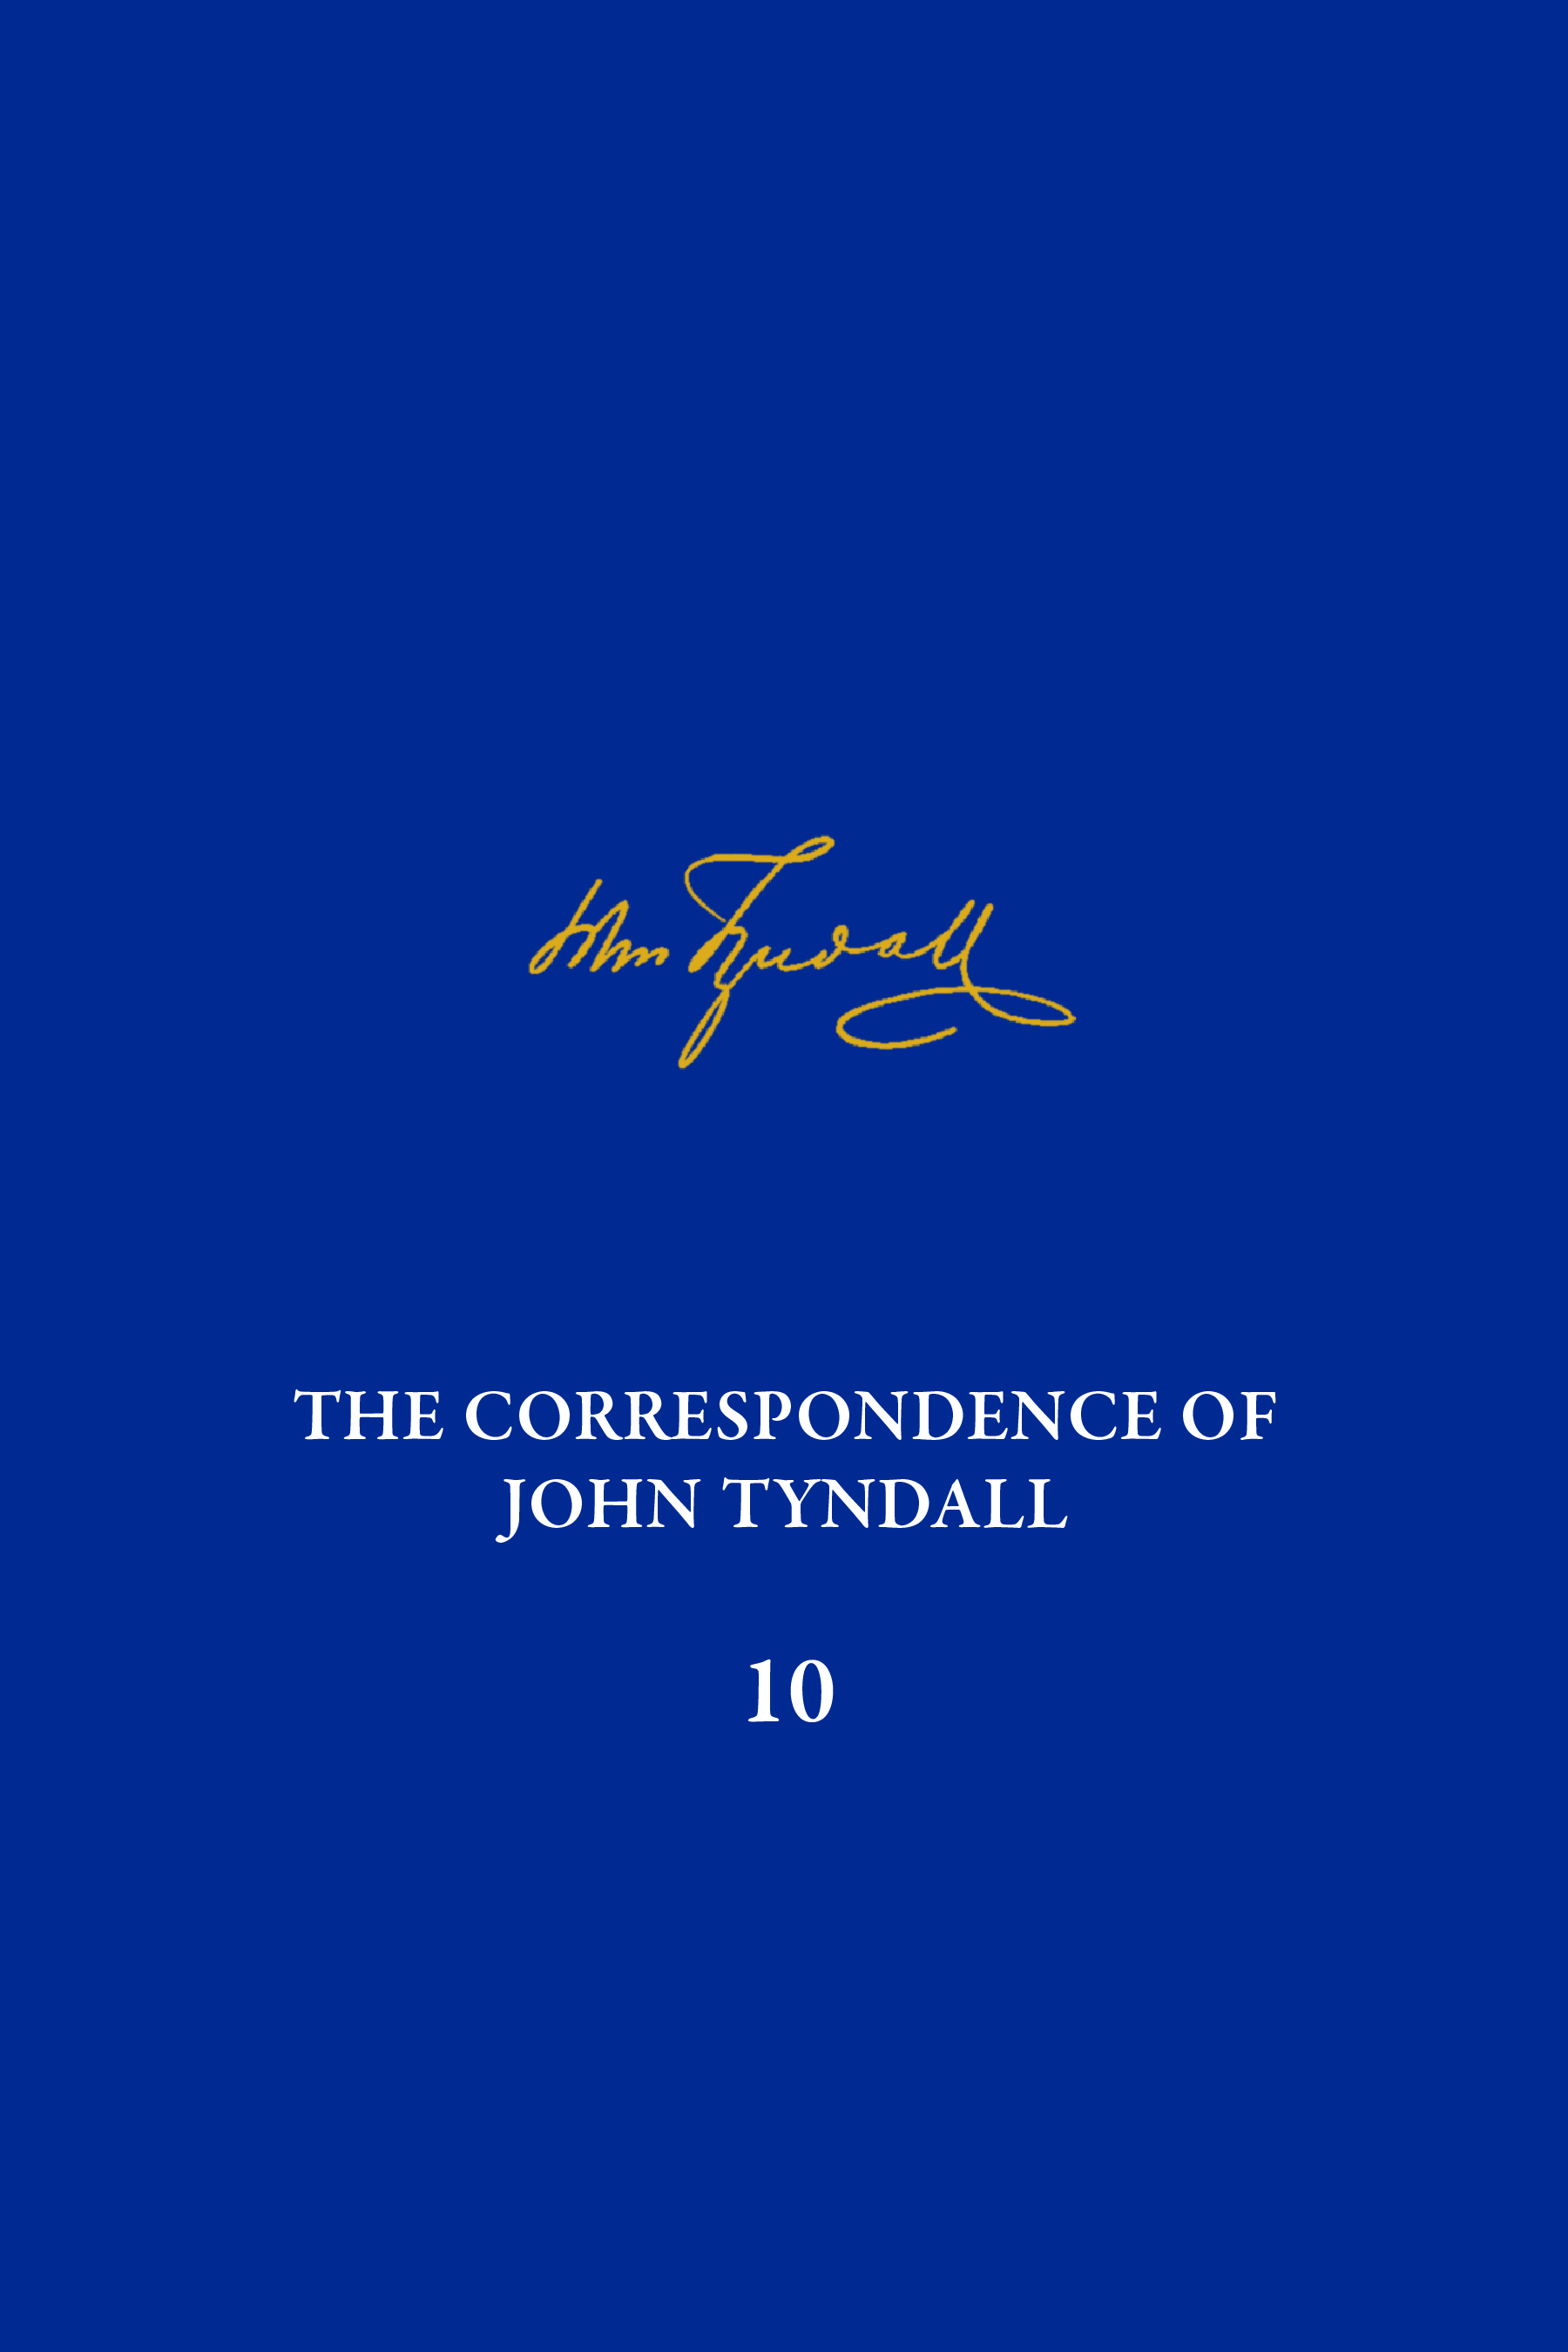 Correspondence of John Tyndall, Volume 10